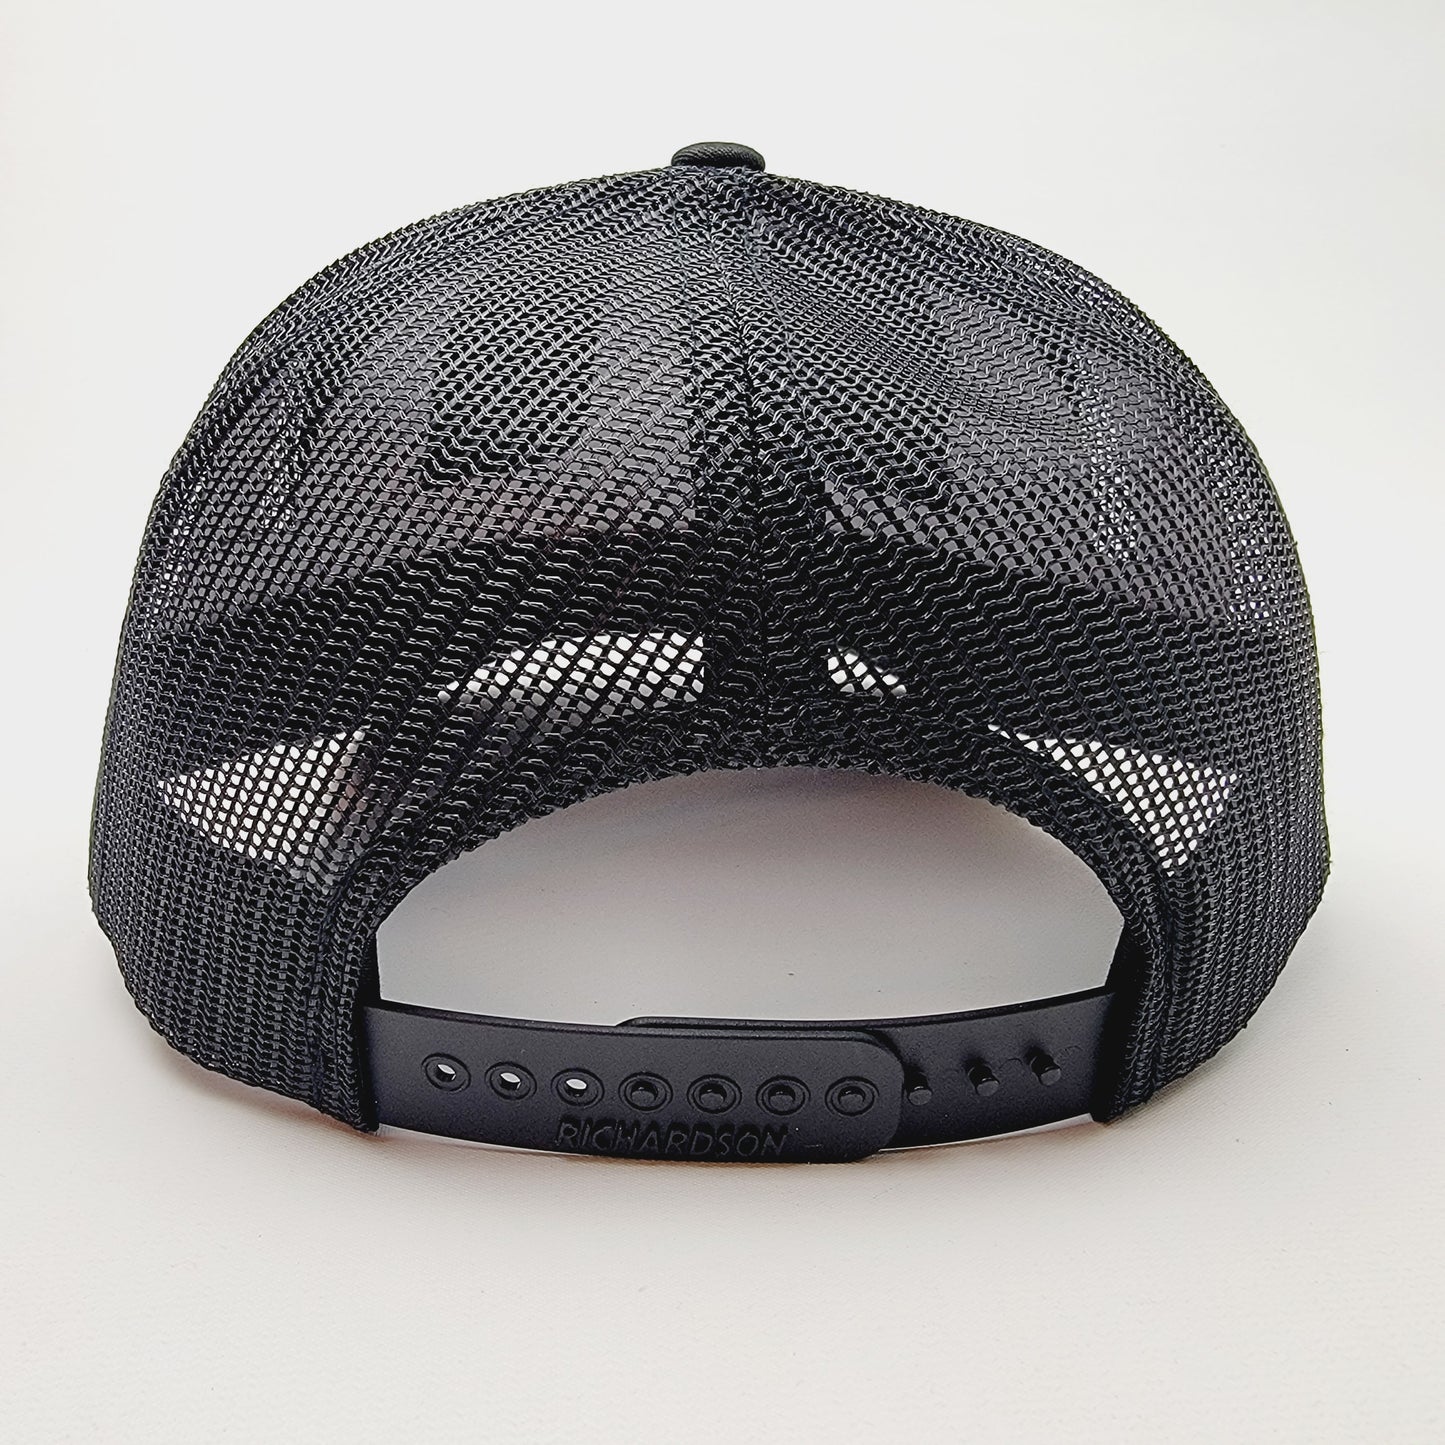 John Deere Richardson 112 Embroidered Patch Curved Bill Mesh Snapback Cap Hat Black